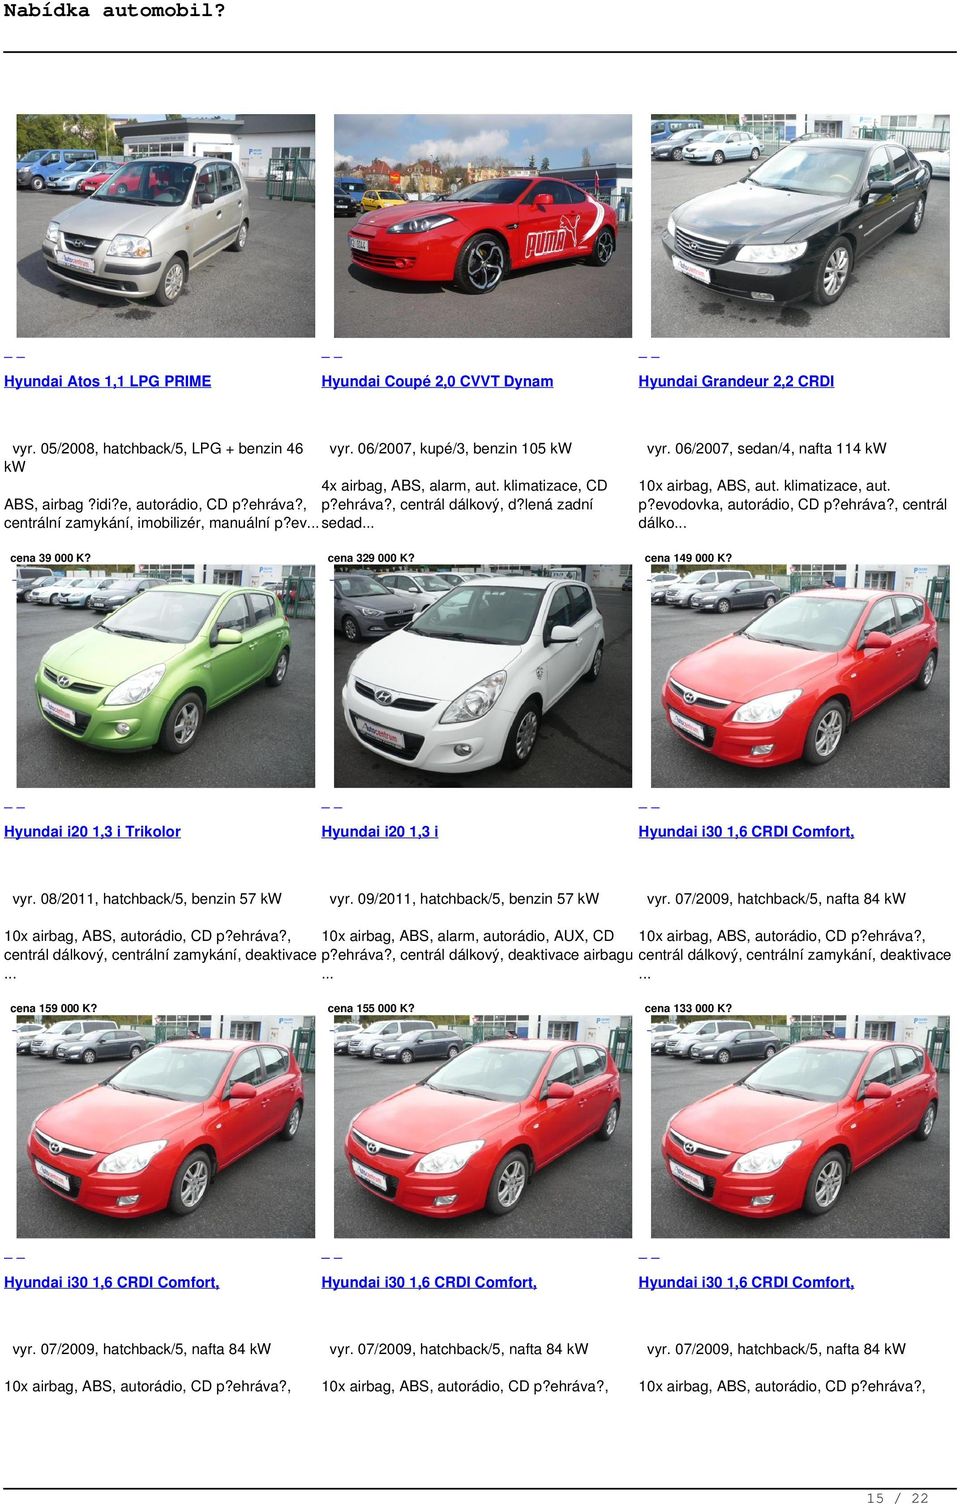 08/2011, hatchback/5, benzin 57 kw cena 329 000 K? Hyundai i20 1,3 i vyr. 09/2011, hatchback/5, benzin 57 kw Hyundai Grandeur 2,2 CRDI vyr. 06/2007, sedan/4, nafta 114 kw 10x airbag, ABS, aut.